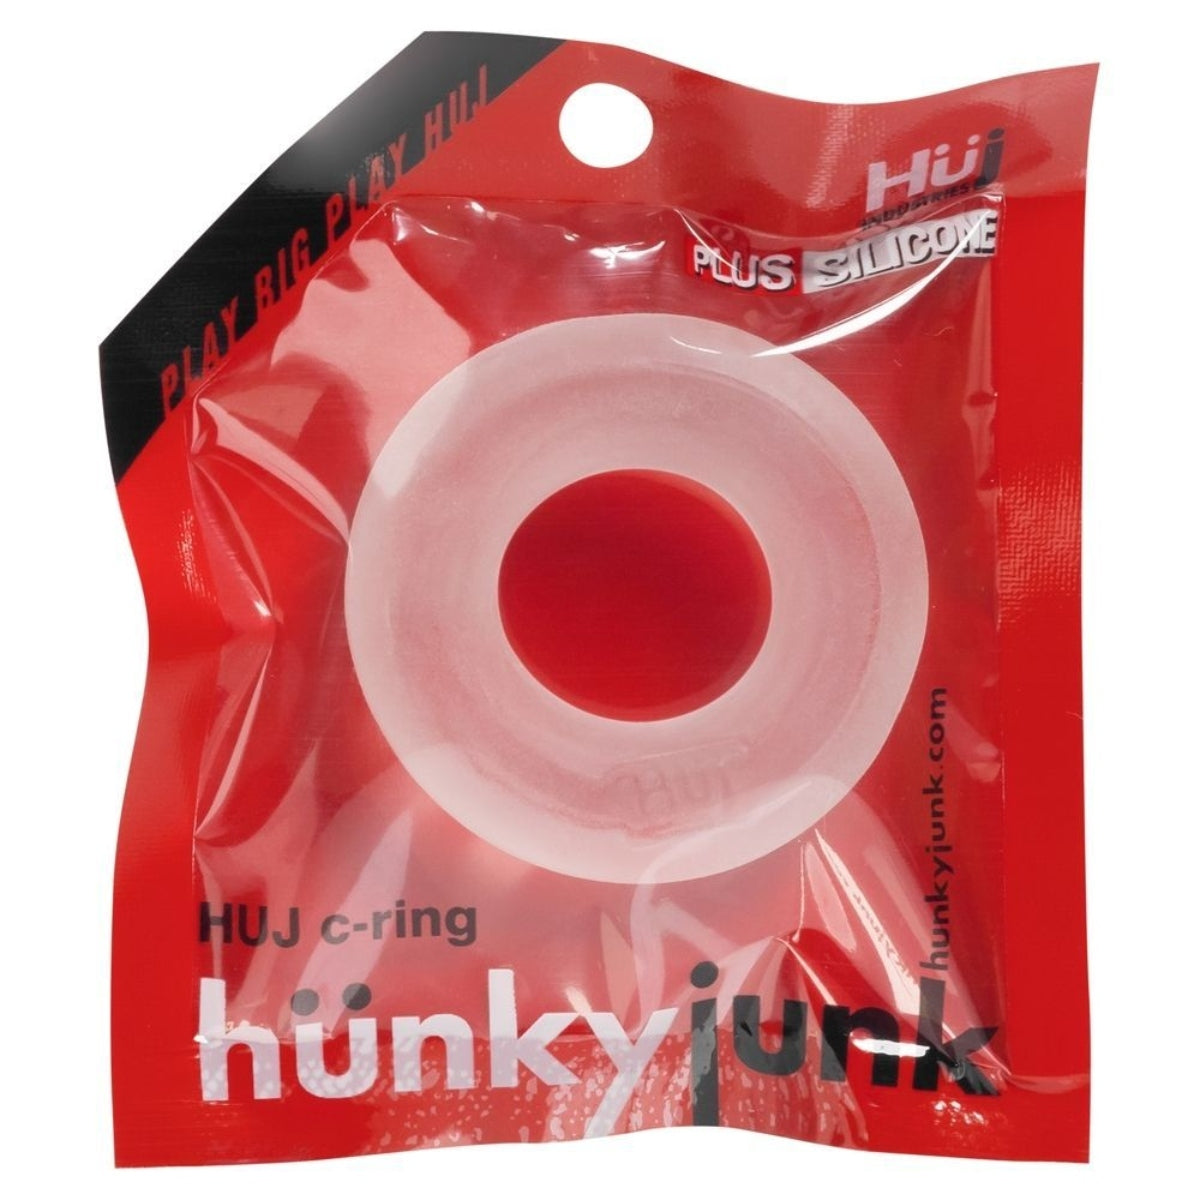 Hunkyjunk HUJ Cock Ring Clear